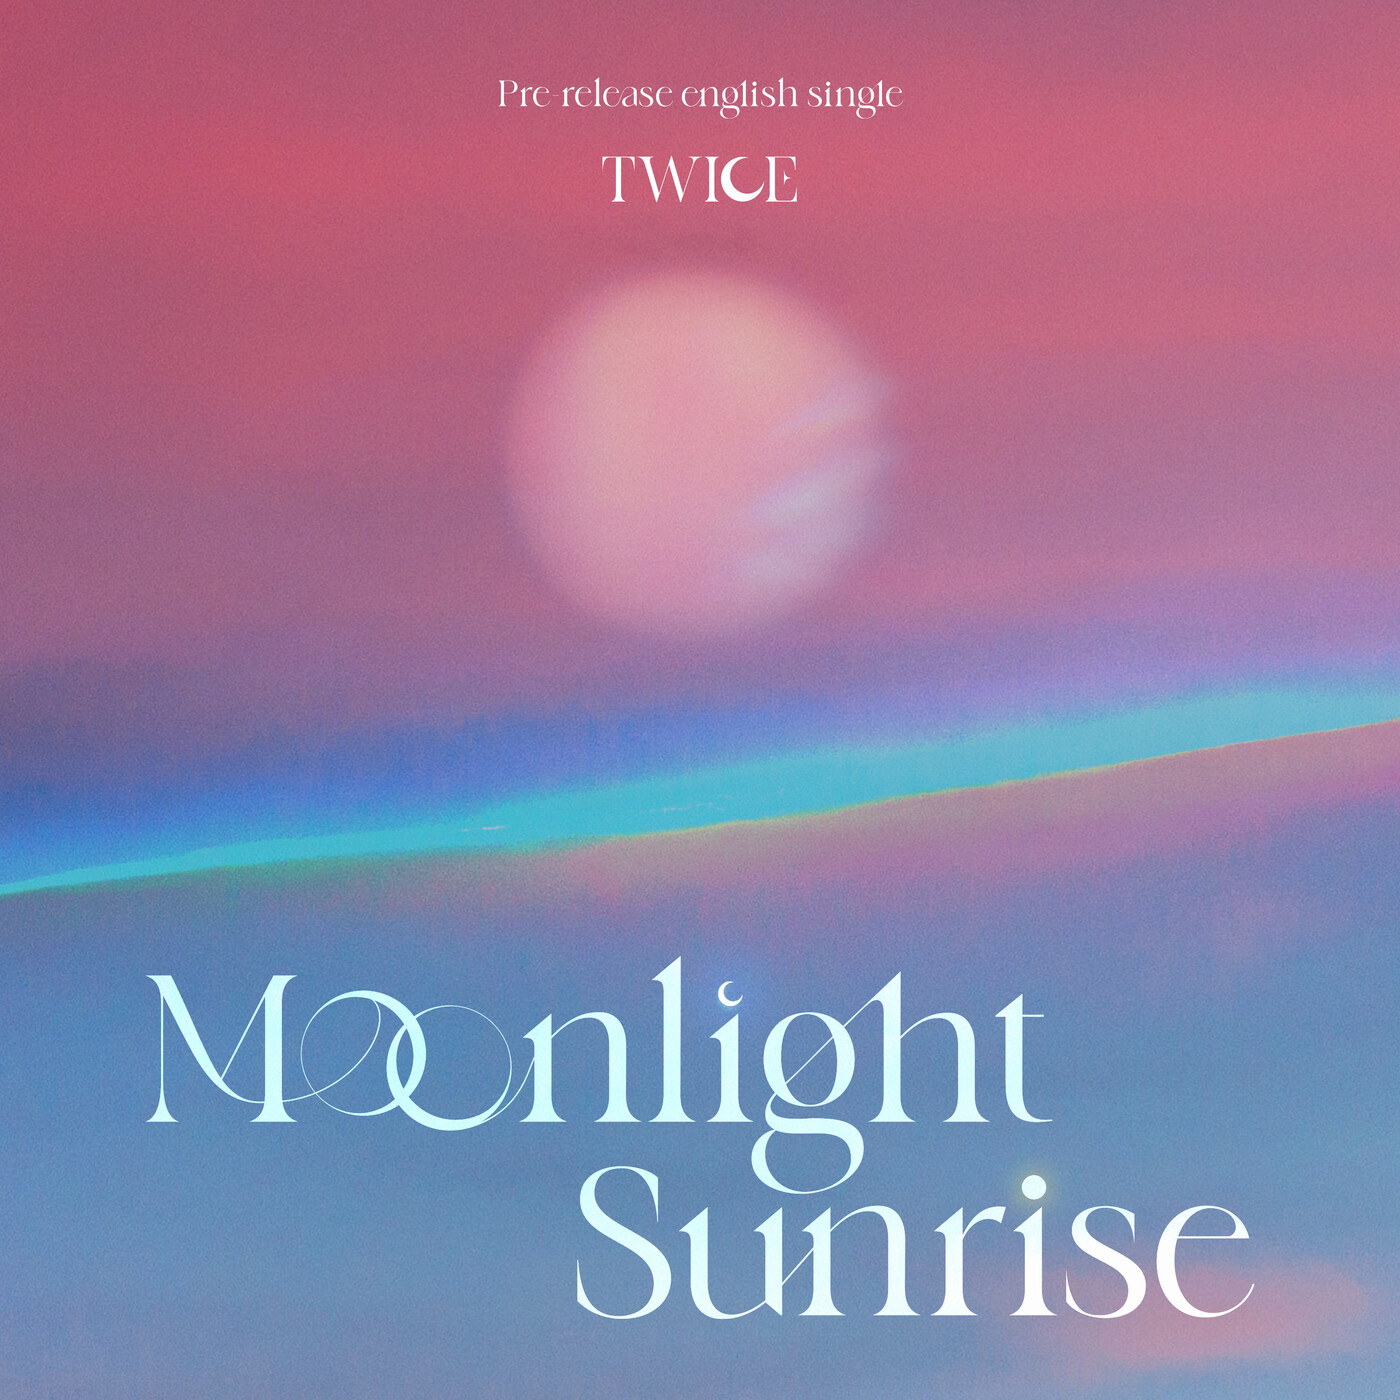 TWICE MOONLIGHT SUNRISE cover artwork